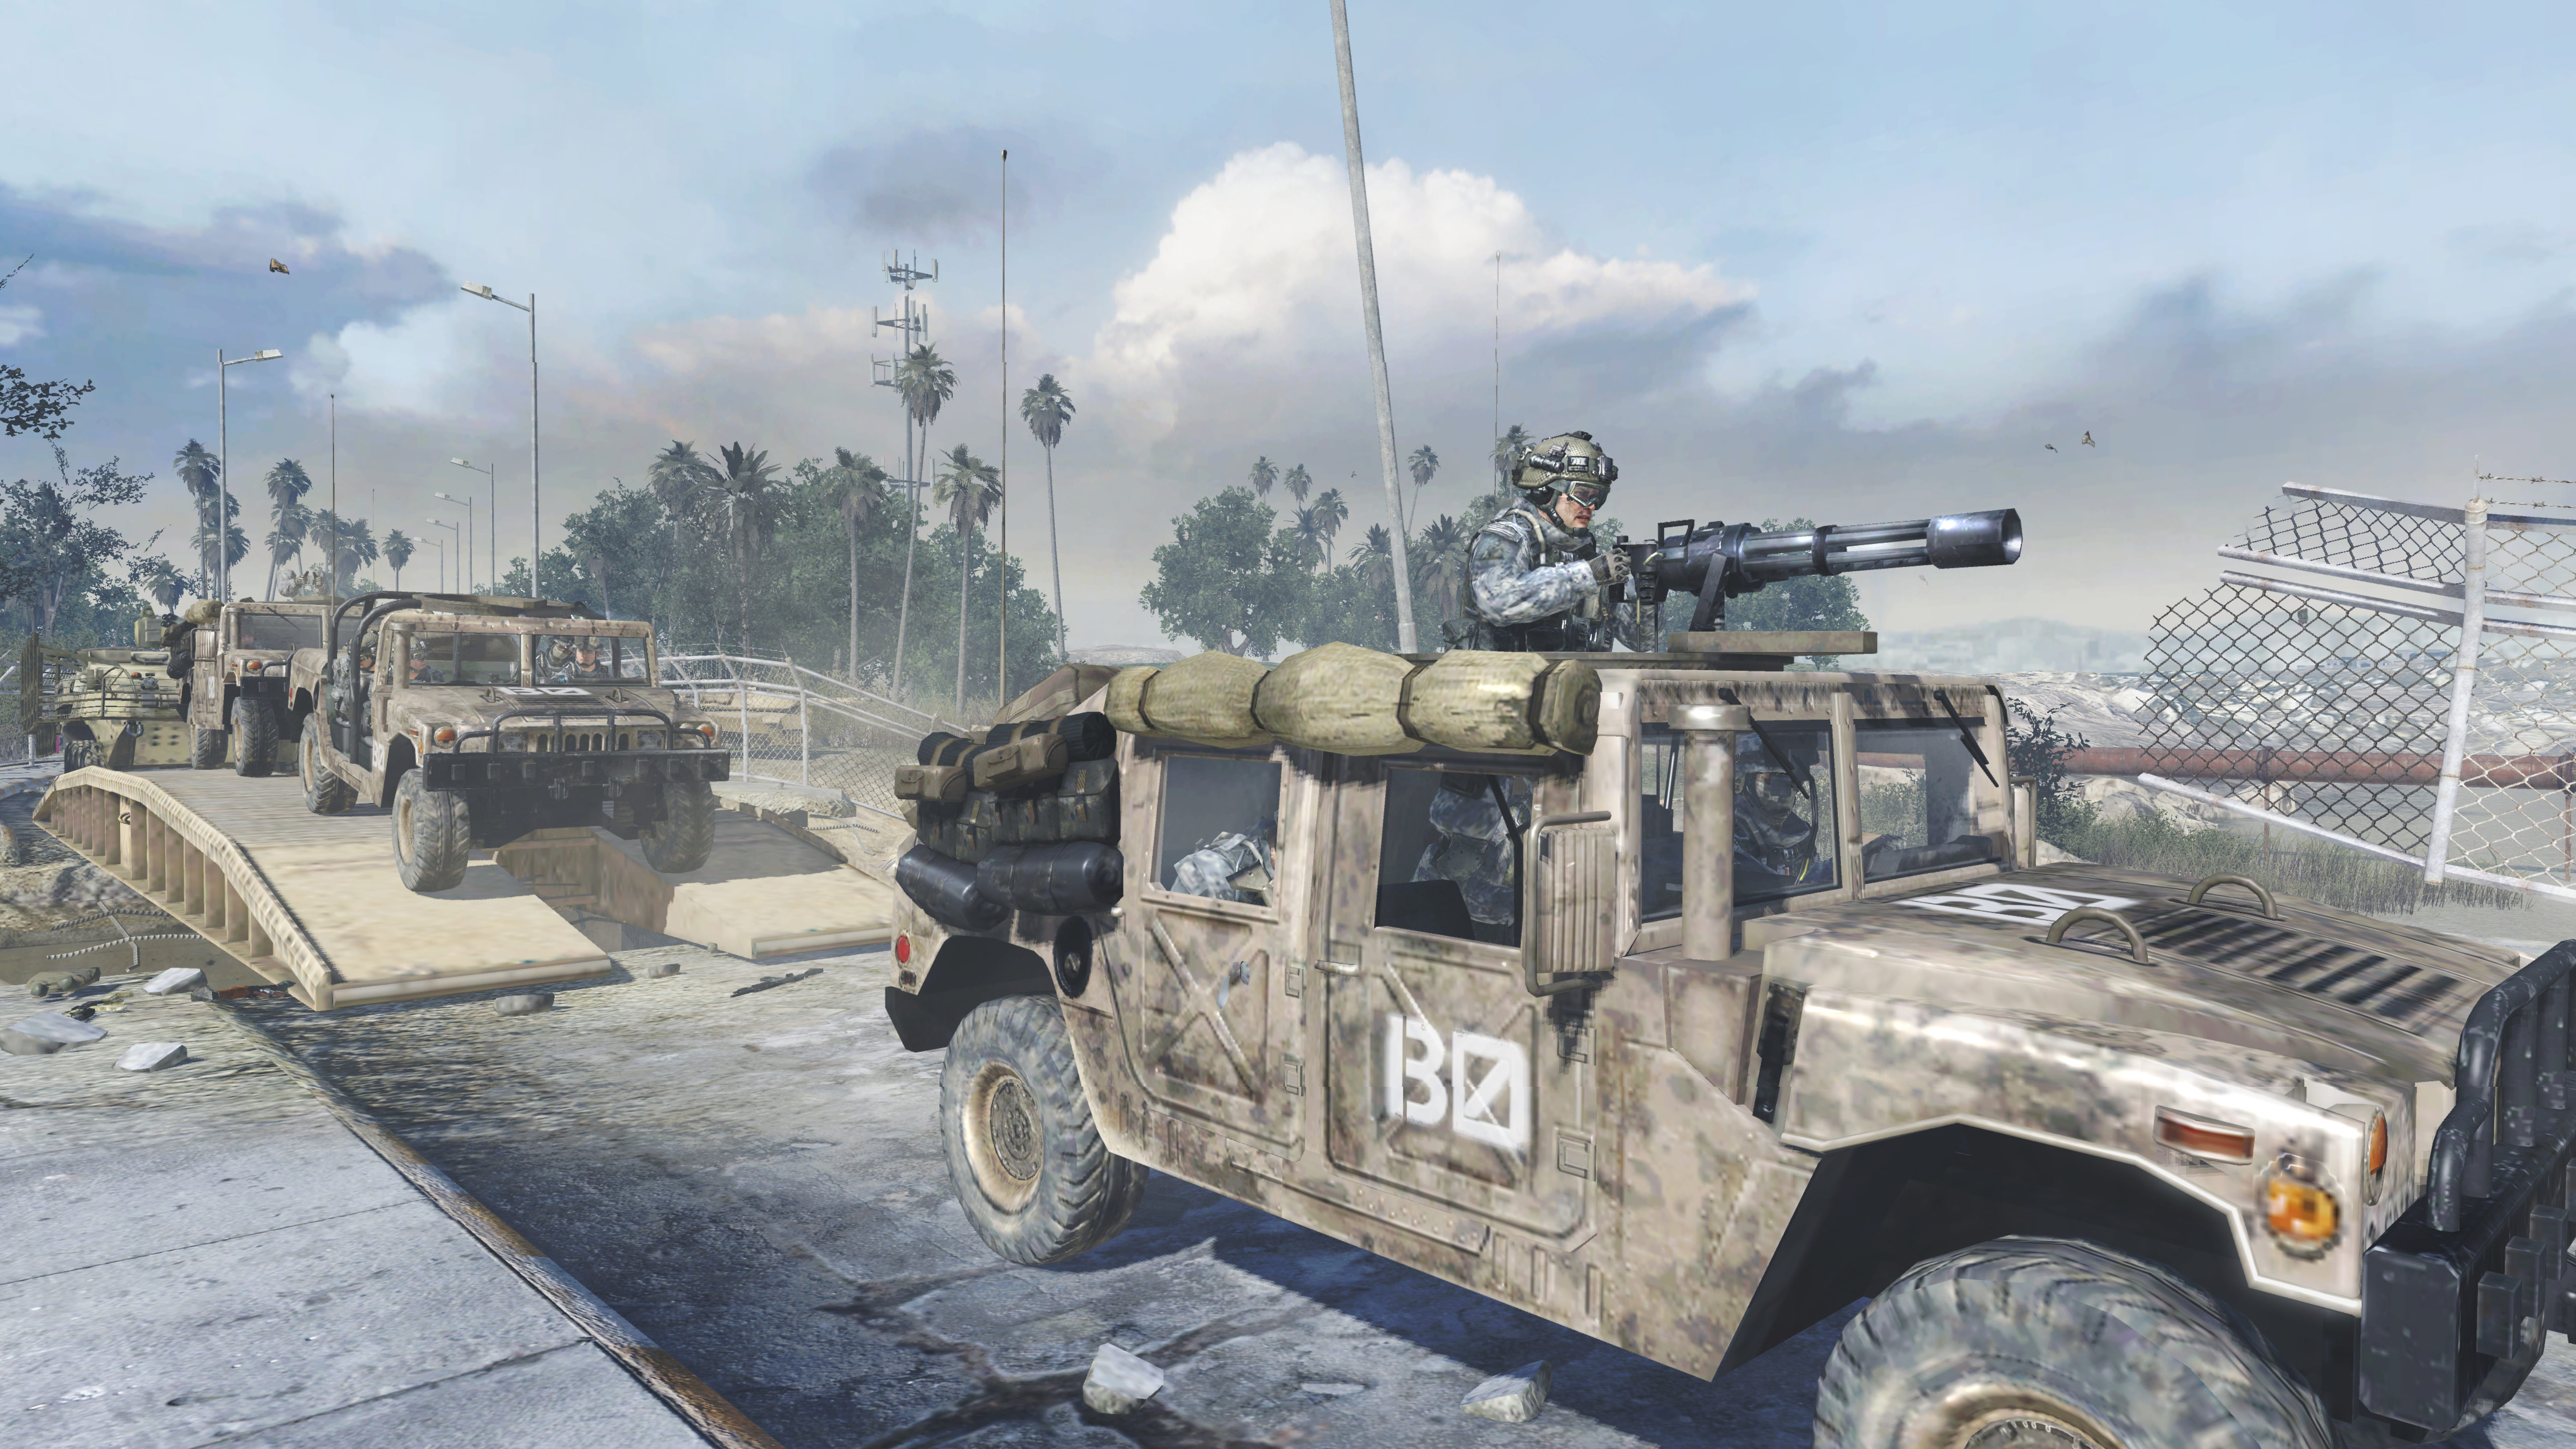 Call of Duty: Modern Warfare 2 (2009) - Multiplayer (App 10190) · SteamDB